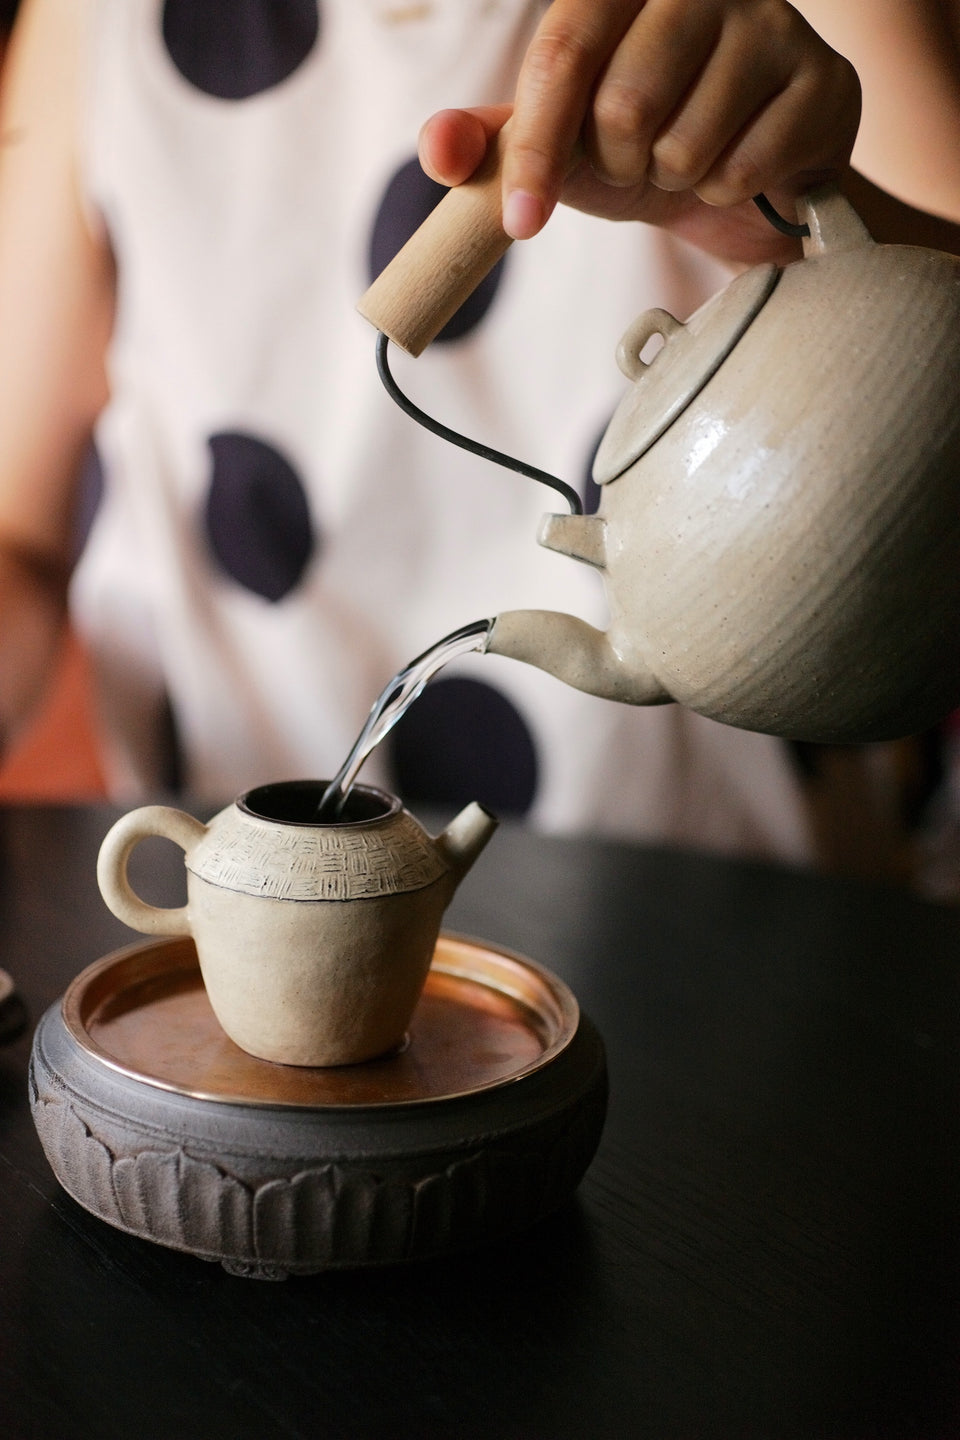 Hand-made white powder-glazed teapot with geometric patterns